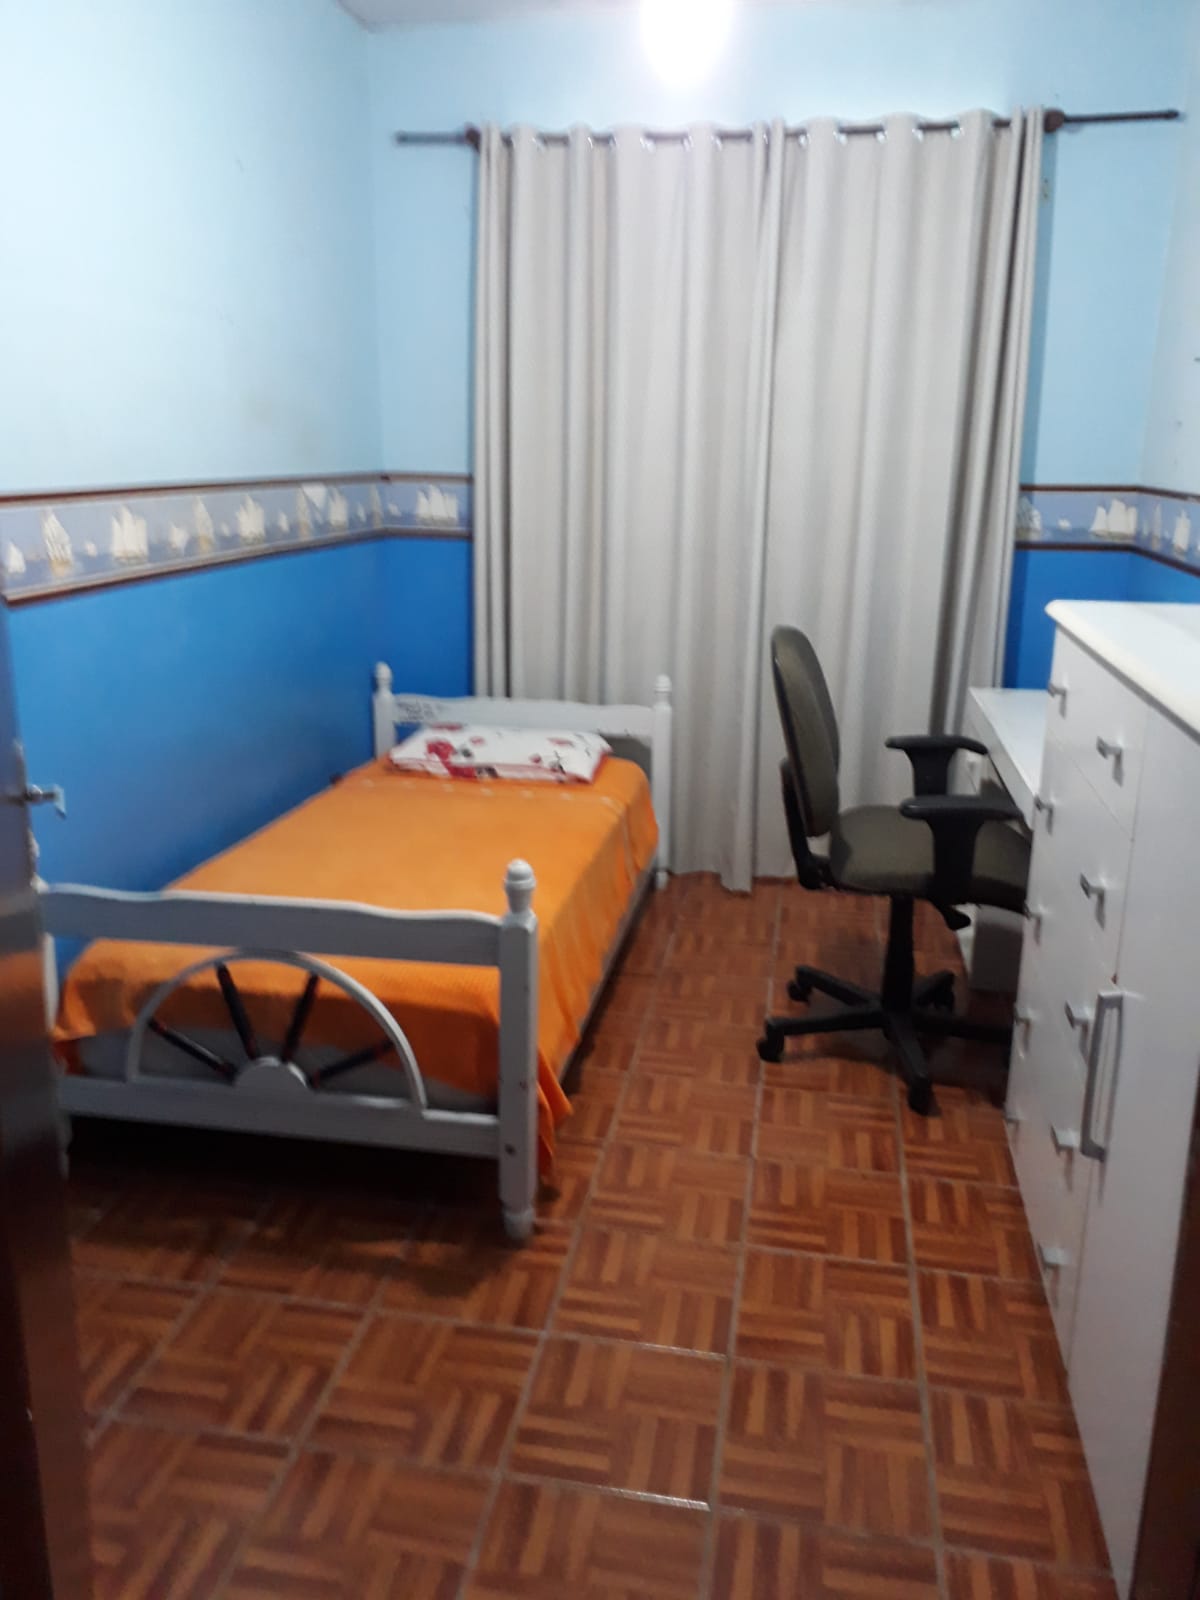 Casa Plana – Averbada – 5 dormitórios (1 suíte) – Escritório – Área de festas – Costa e Silva